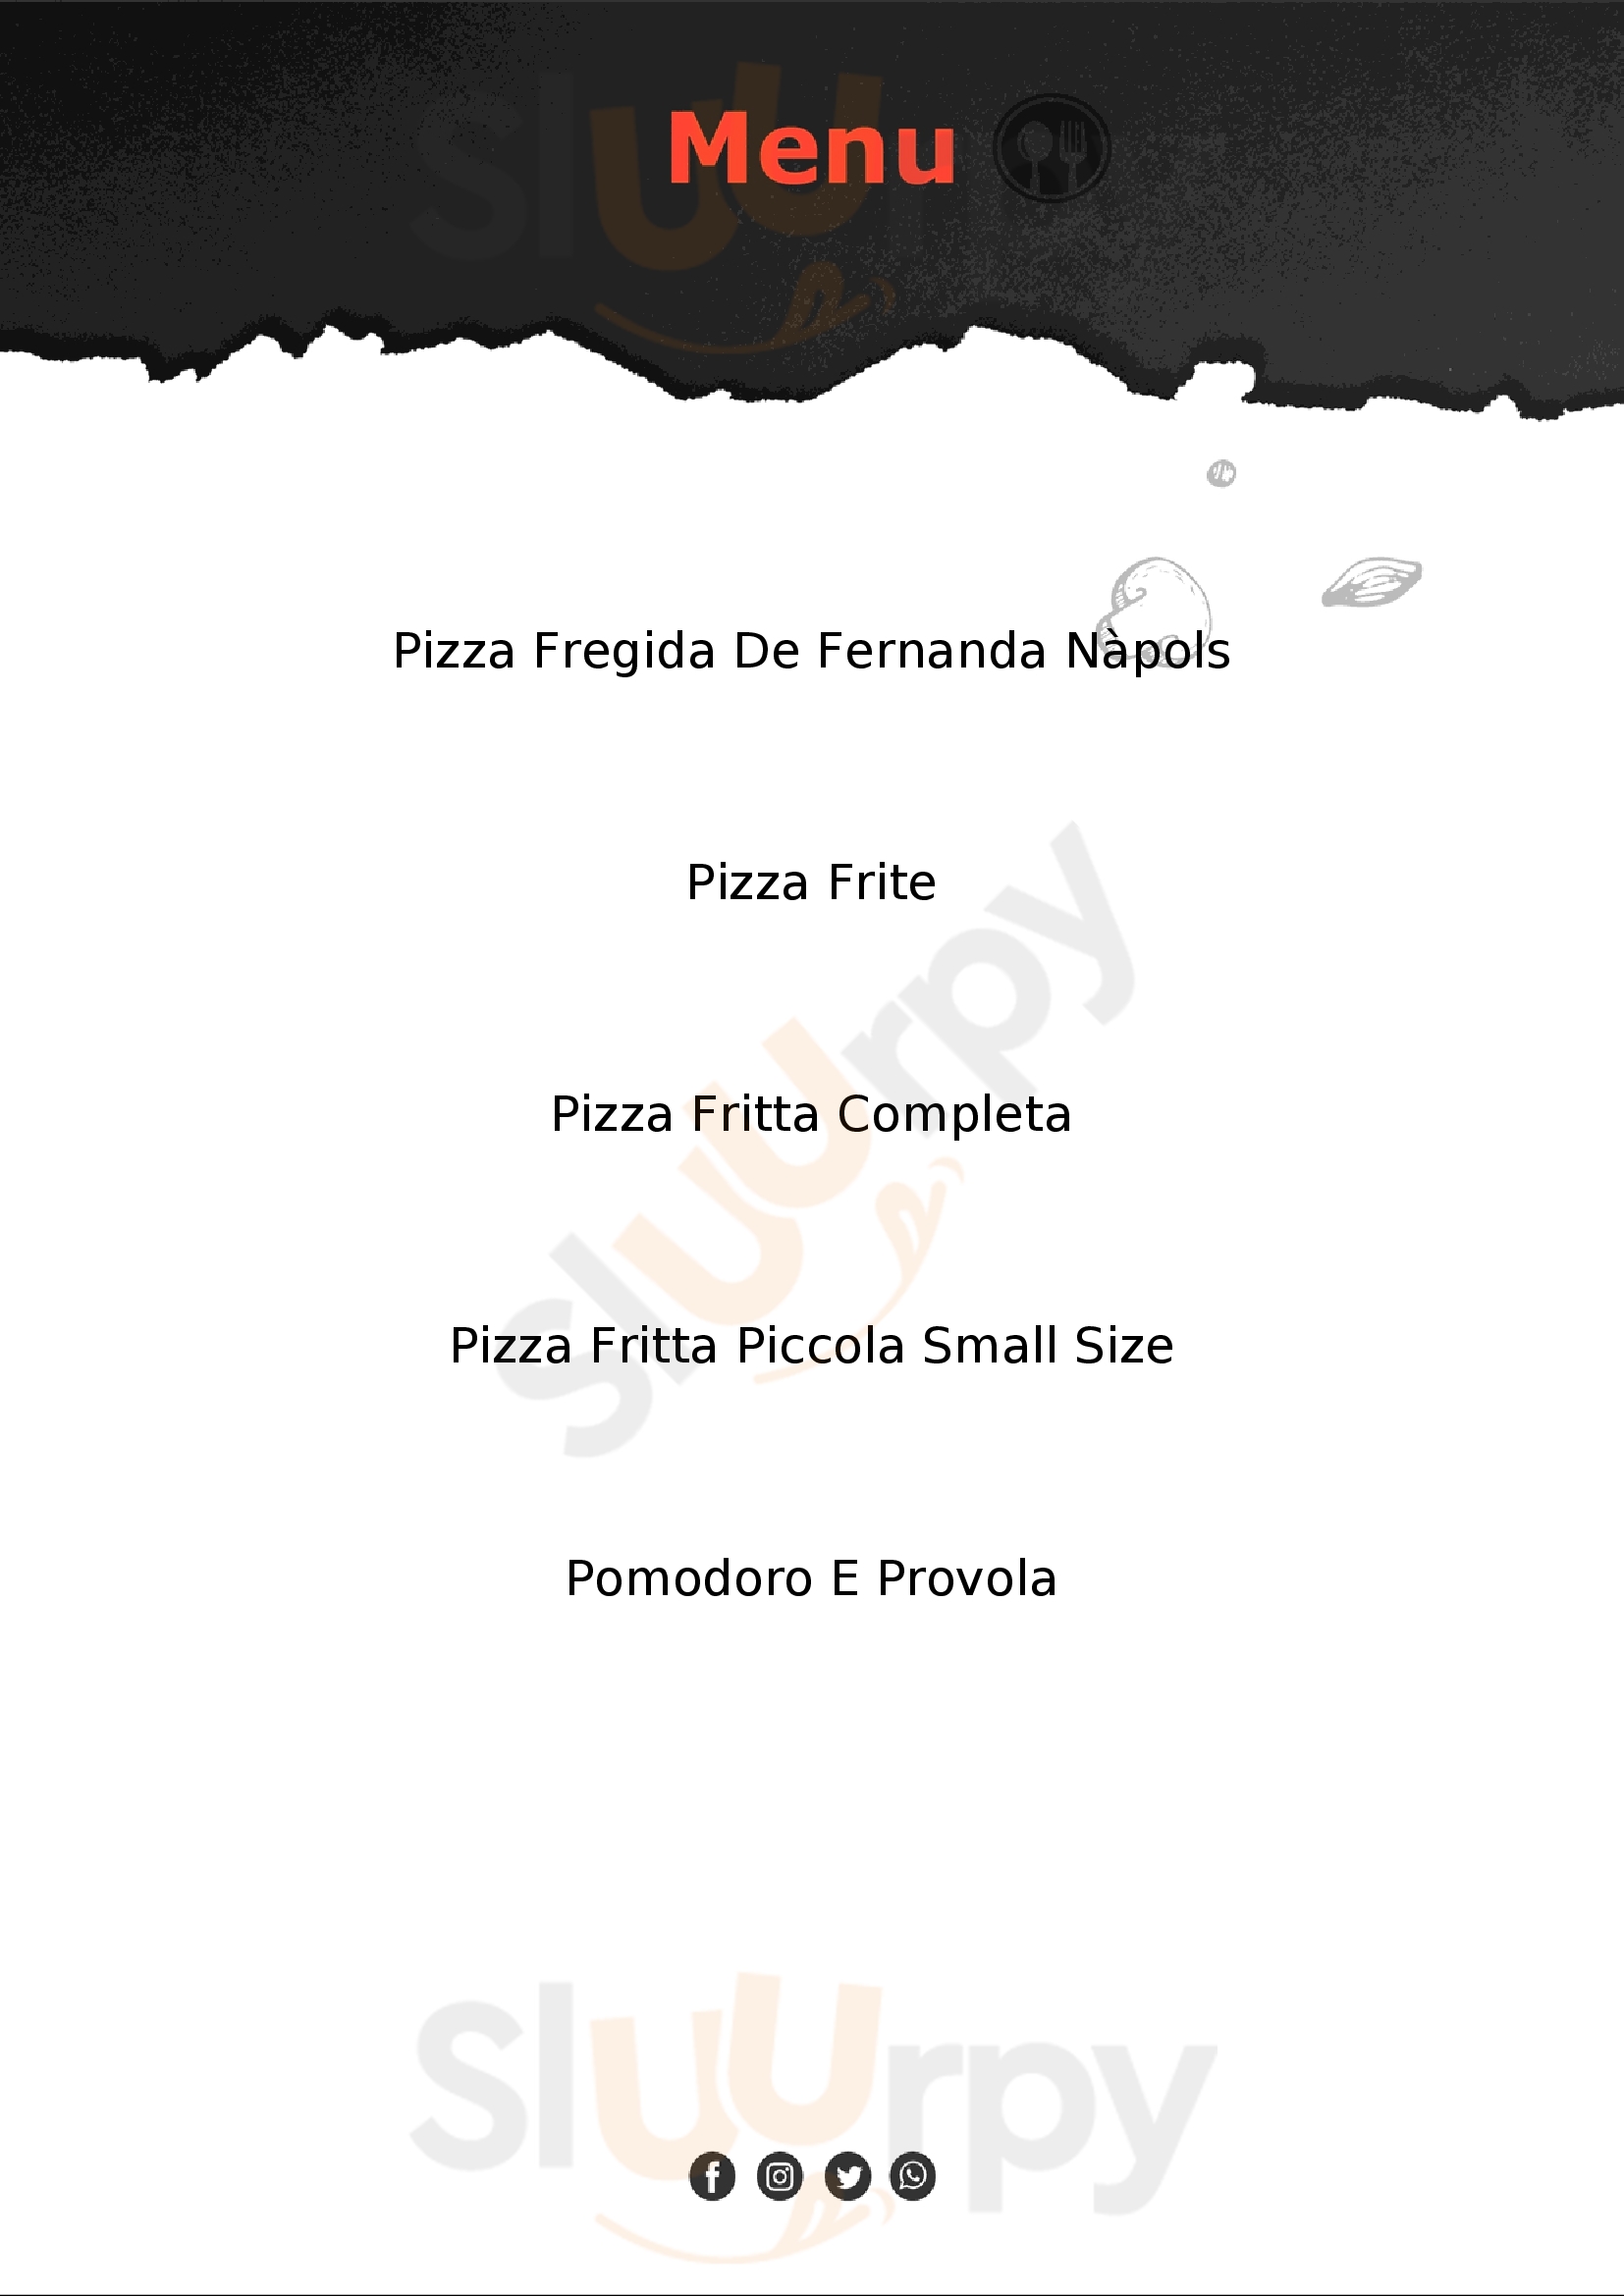 Pizze Fritte da Fernanda Napoli menù 1 pagina